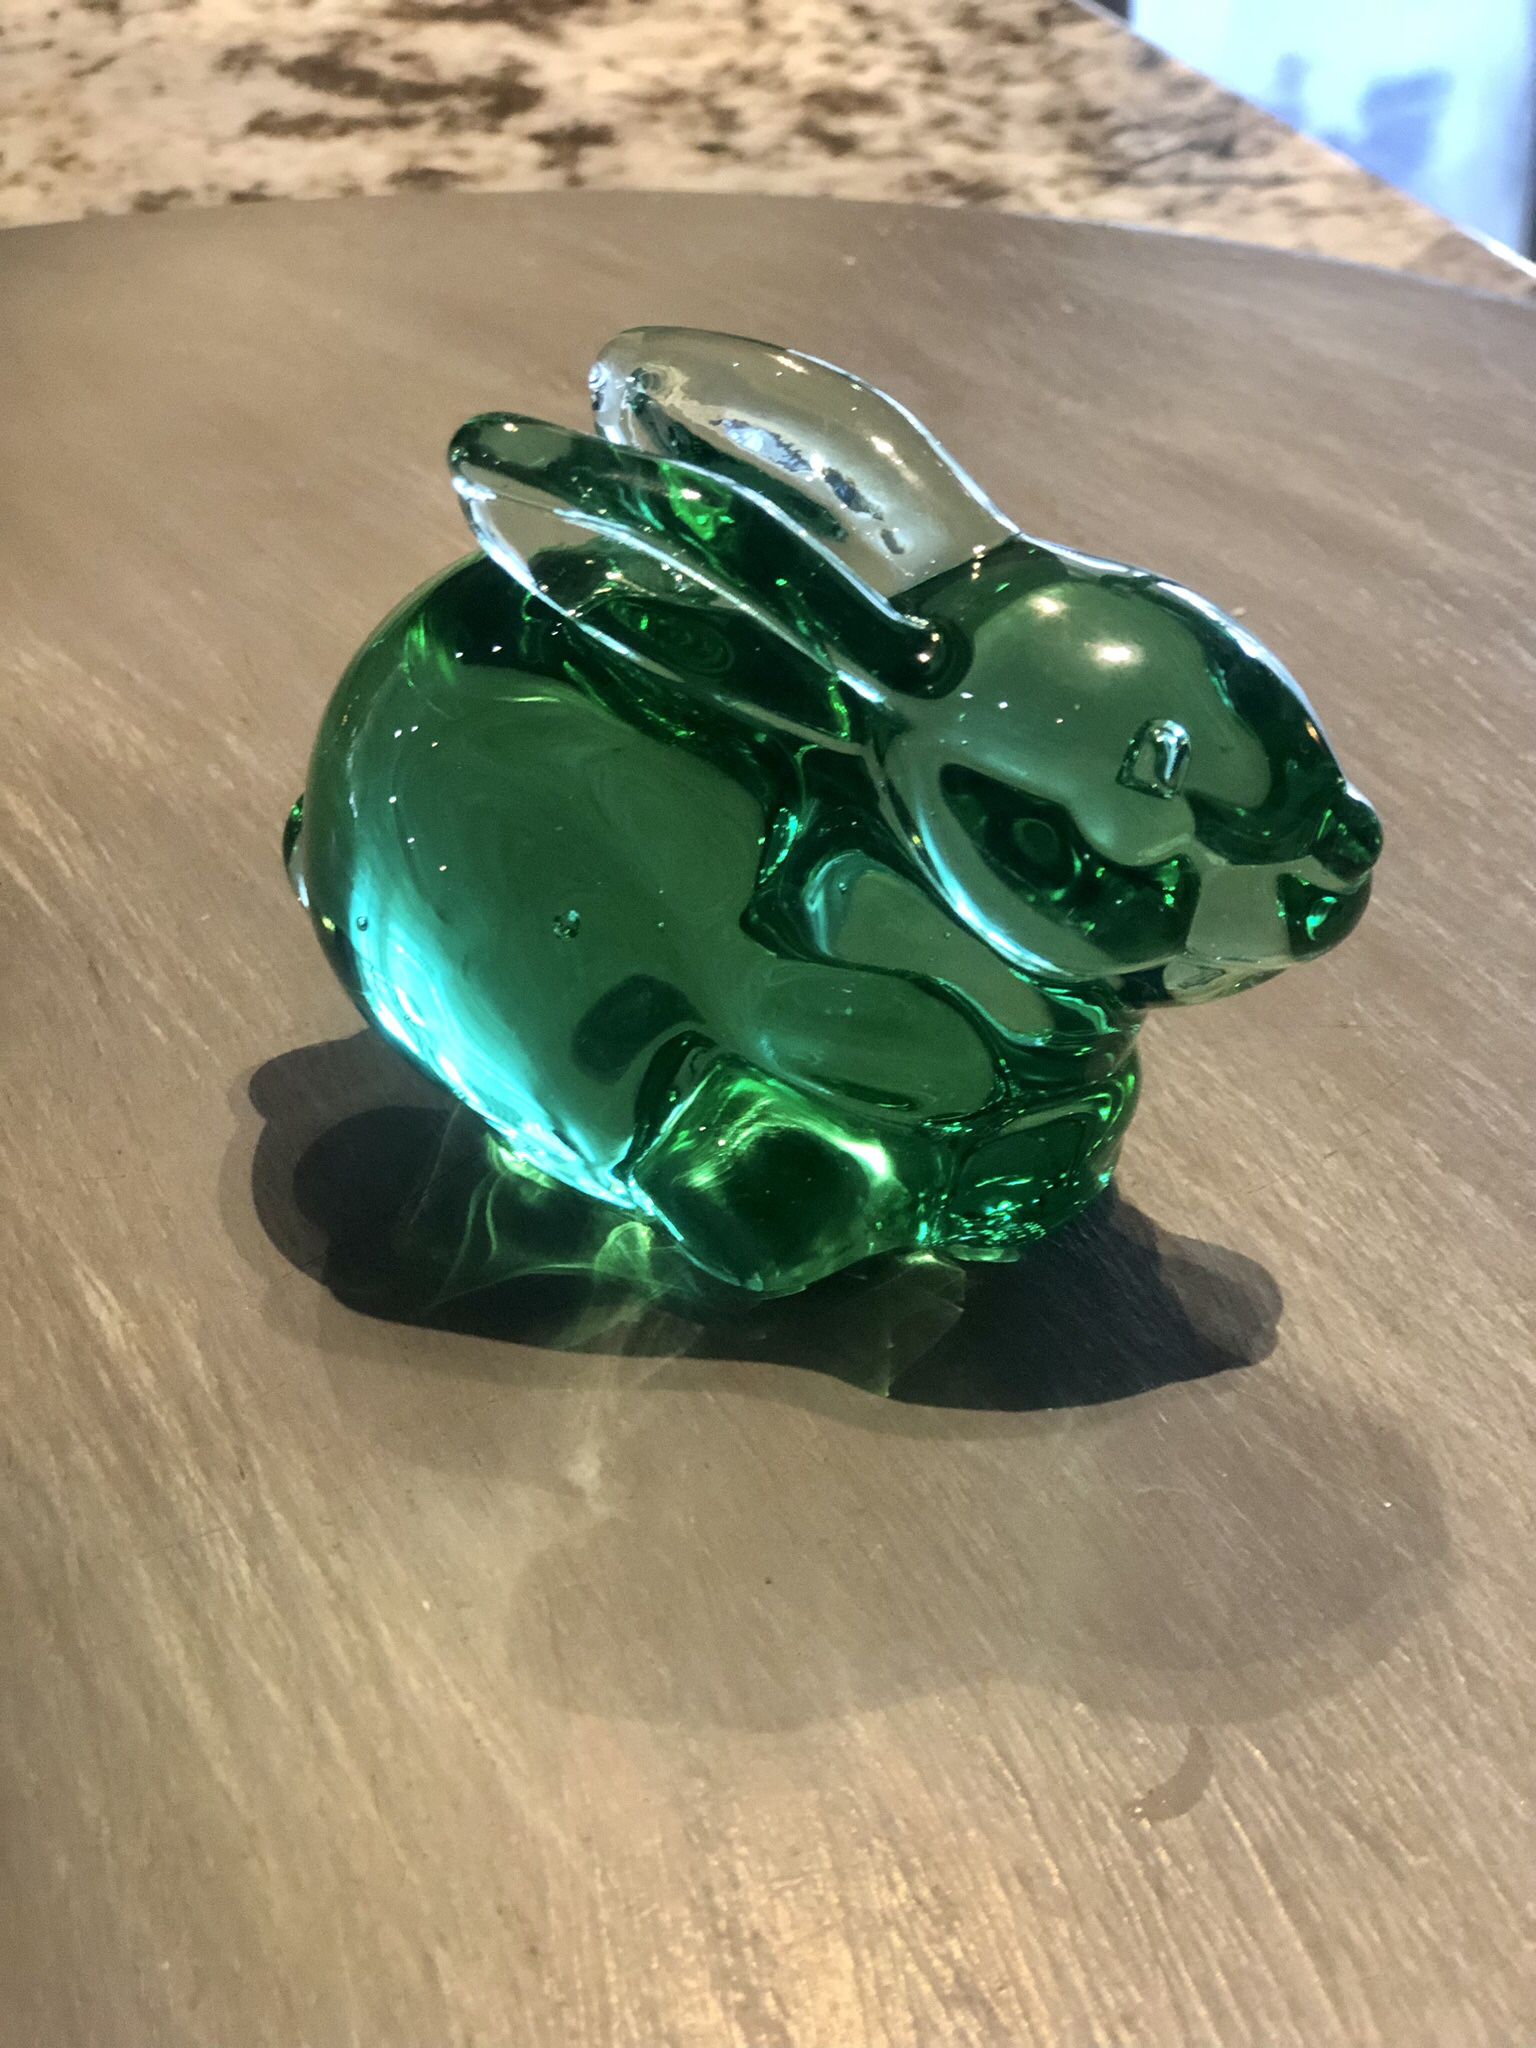 Emerald Green Art Glass Bunny Paperweight Figurine Bubbles Polish Bottom 4”